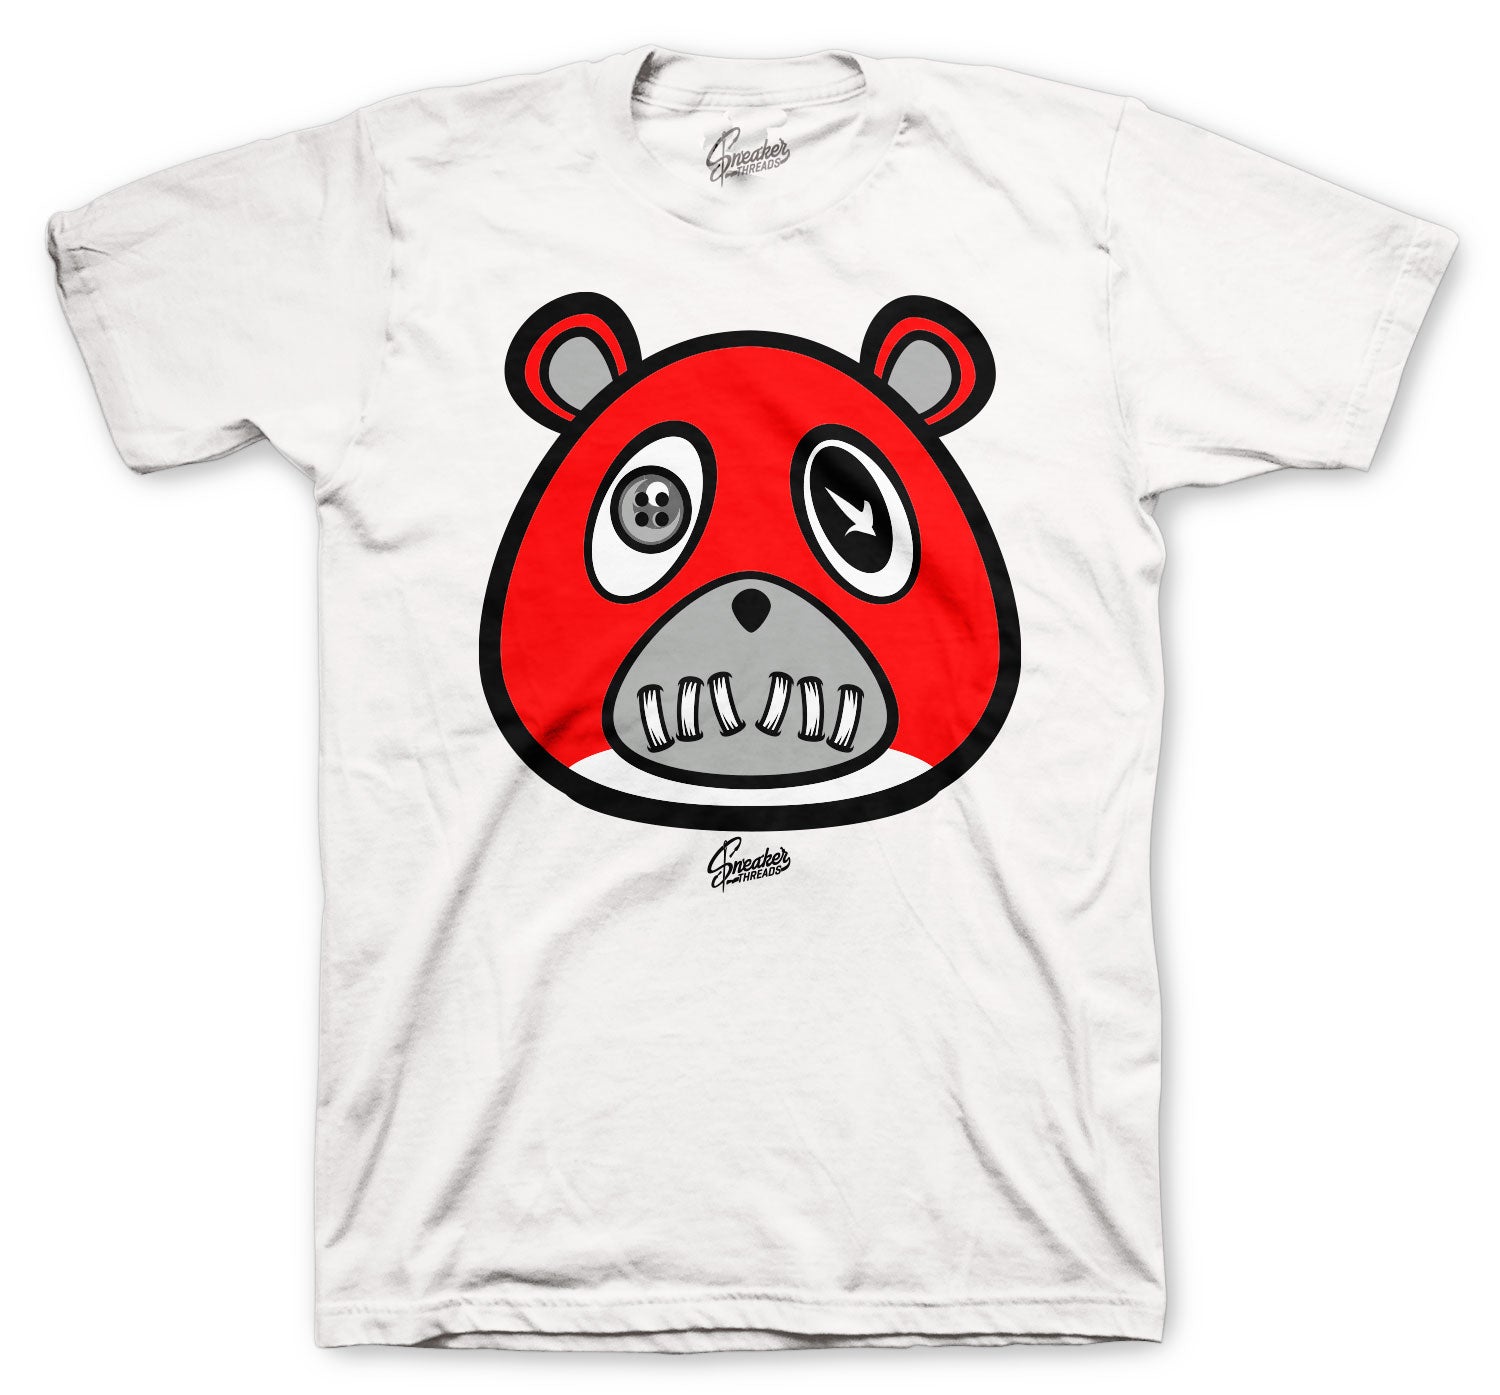 Dunk SB Chicago Shirt - ST Bear - White